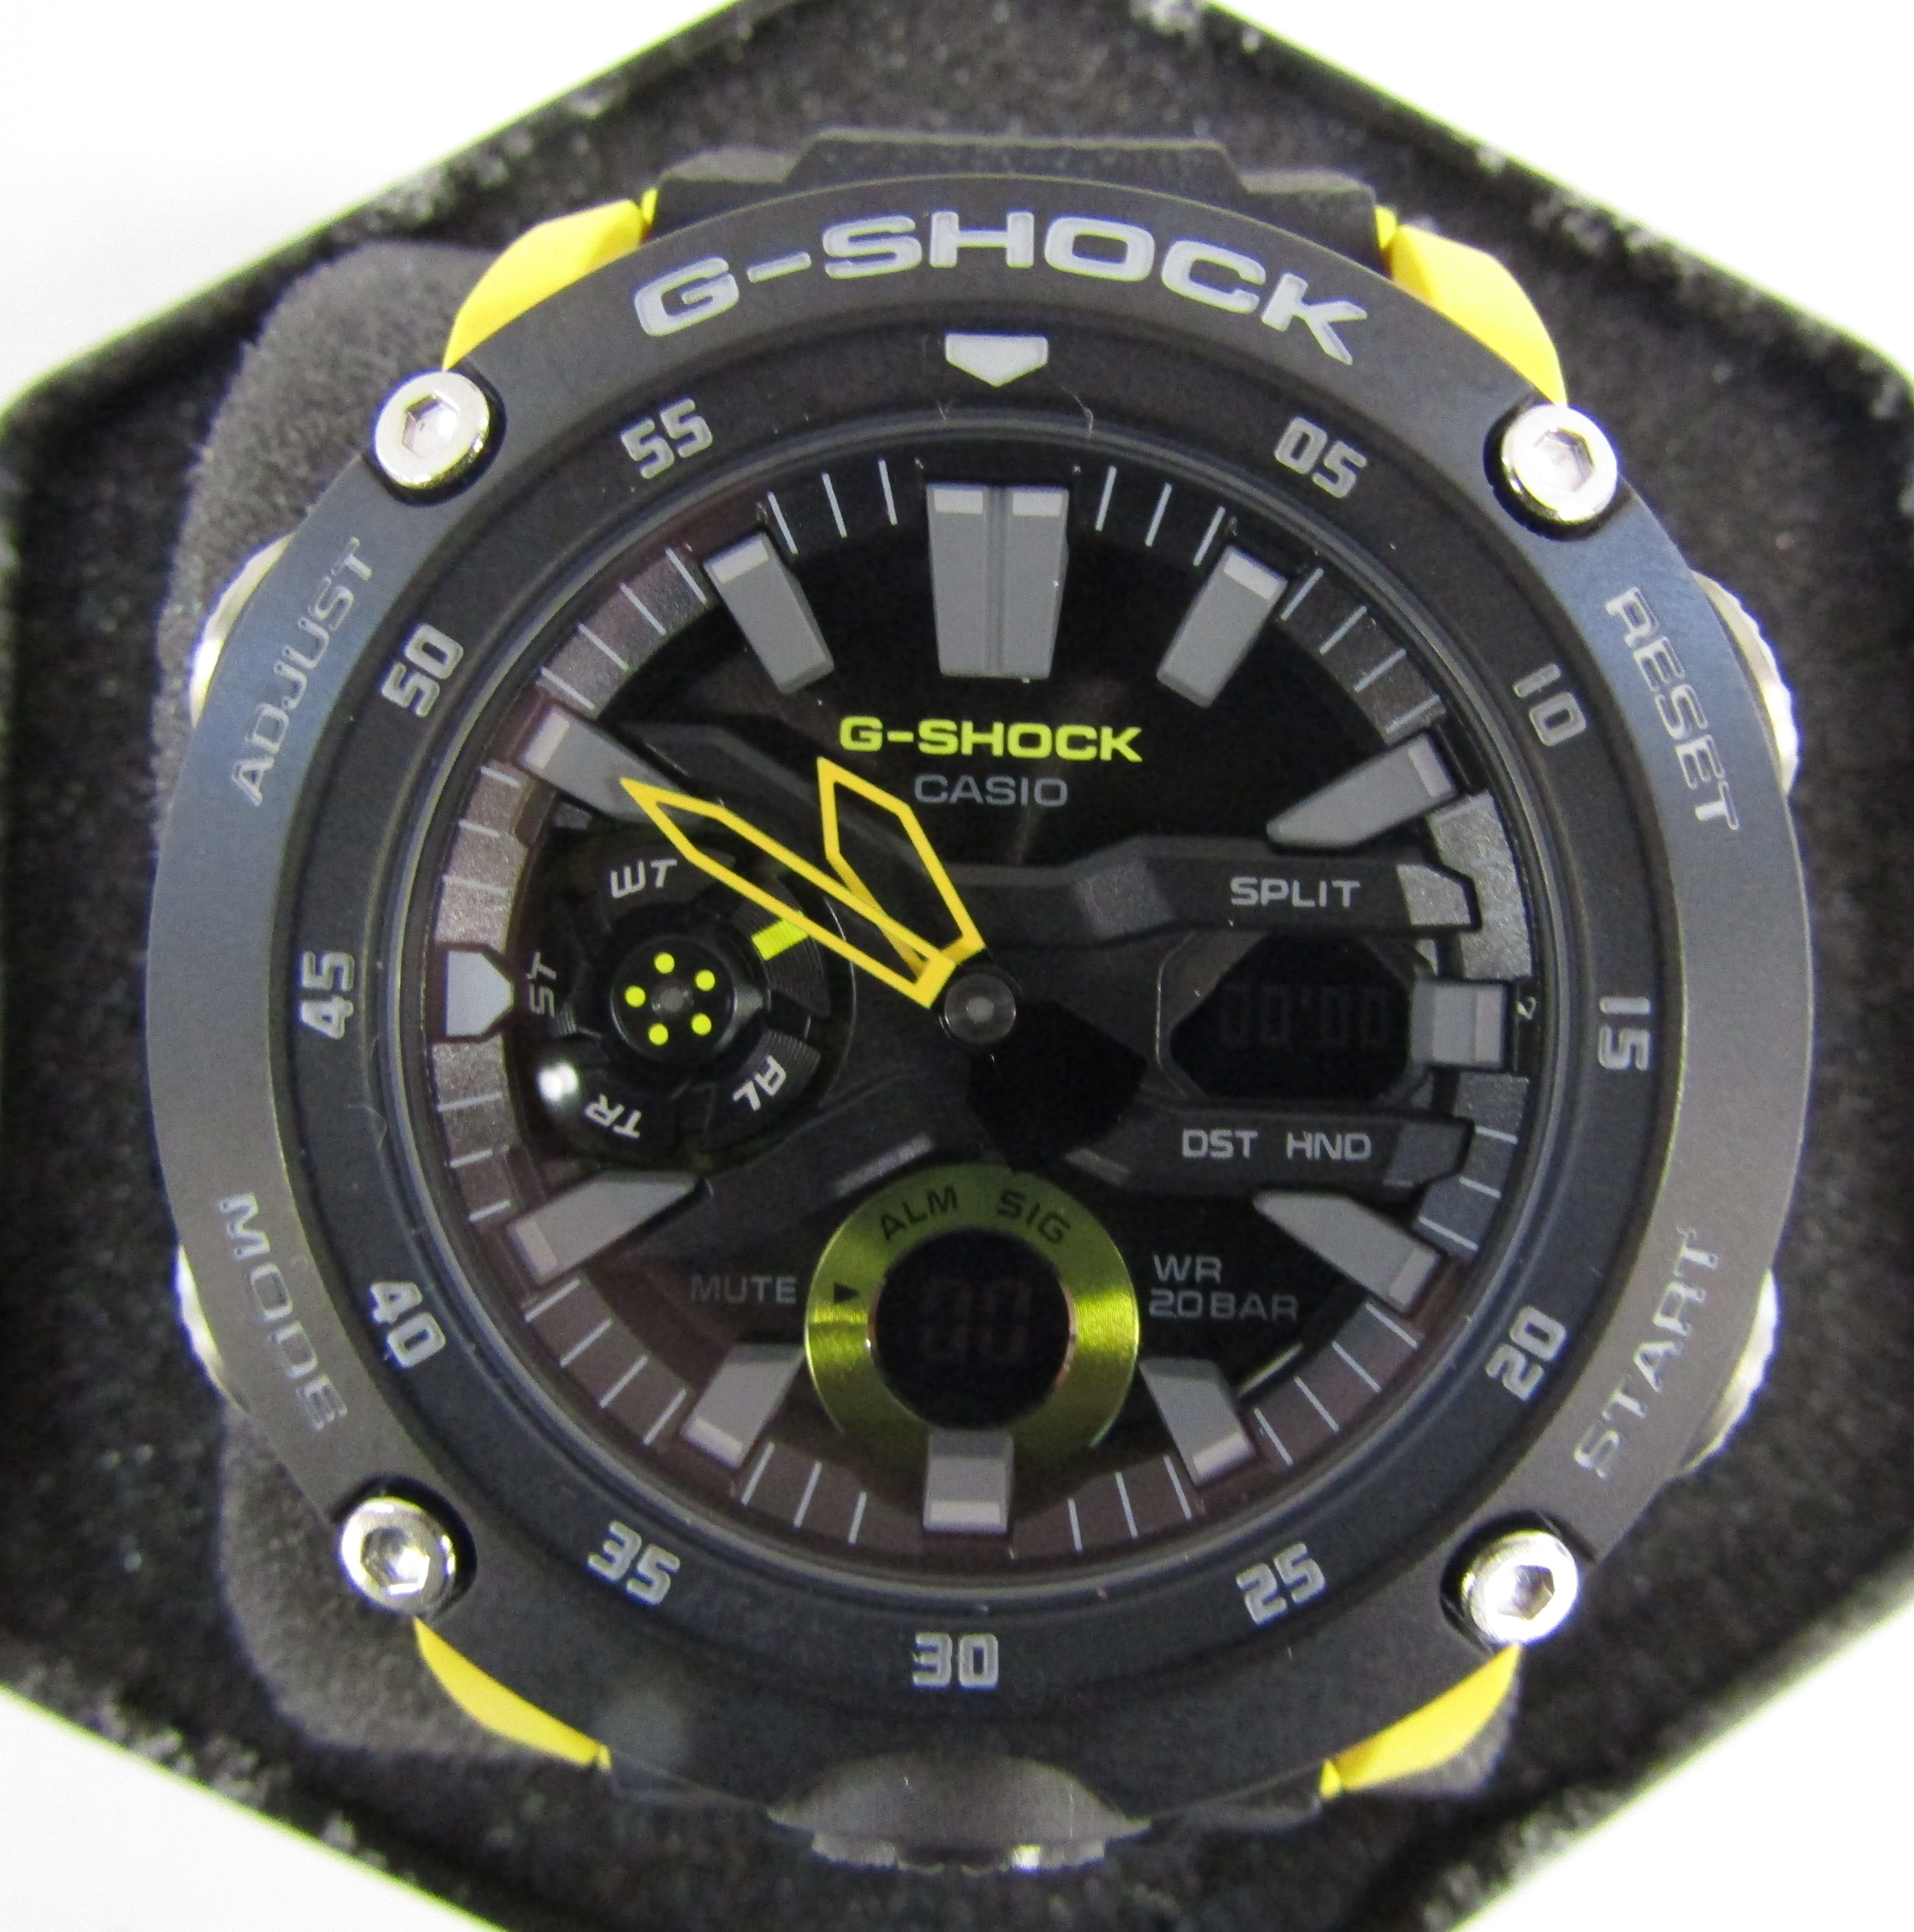 7 Casio G-Shock watches - 2 x 5590 GA-2000 one with box - 5513GST-B100 - 5637 GA-900A - 240 DW- - Image 2 of 15